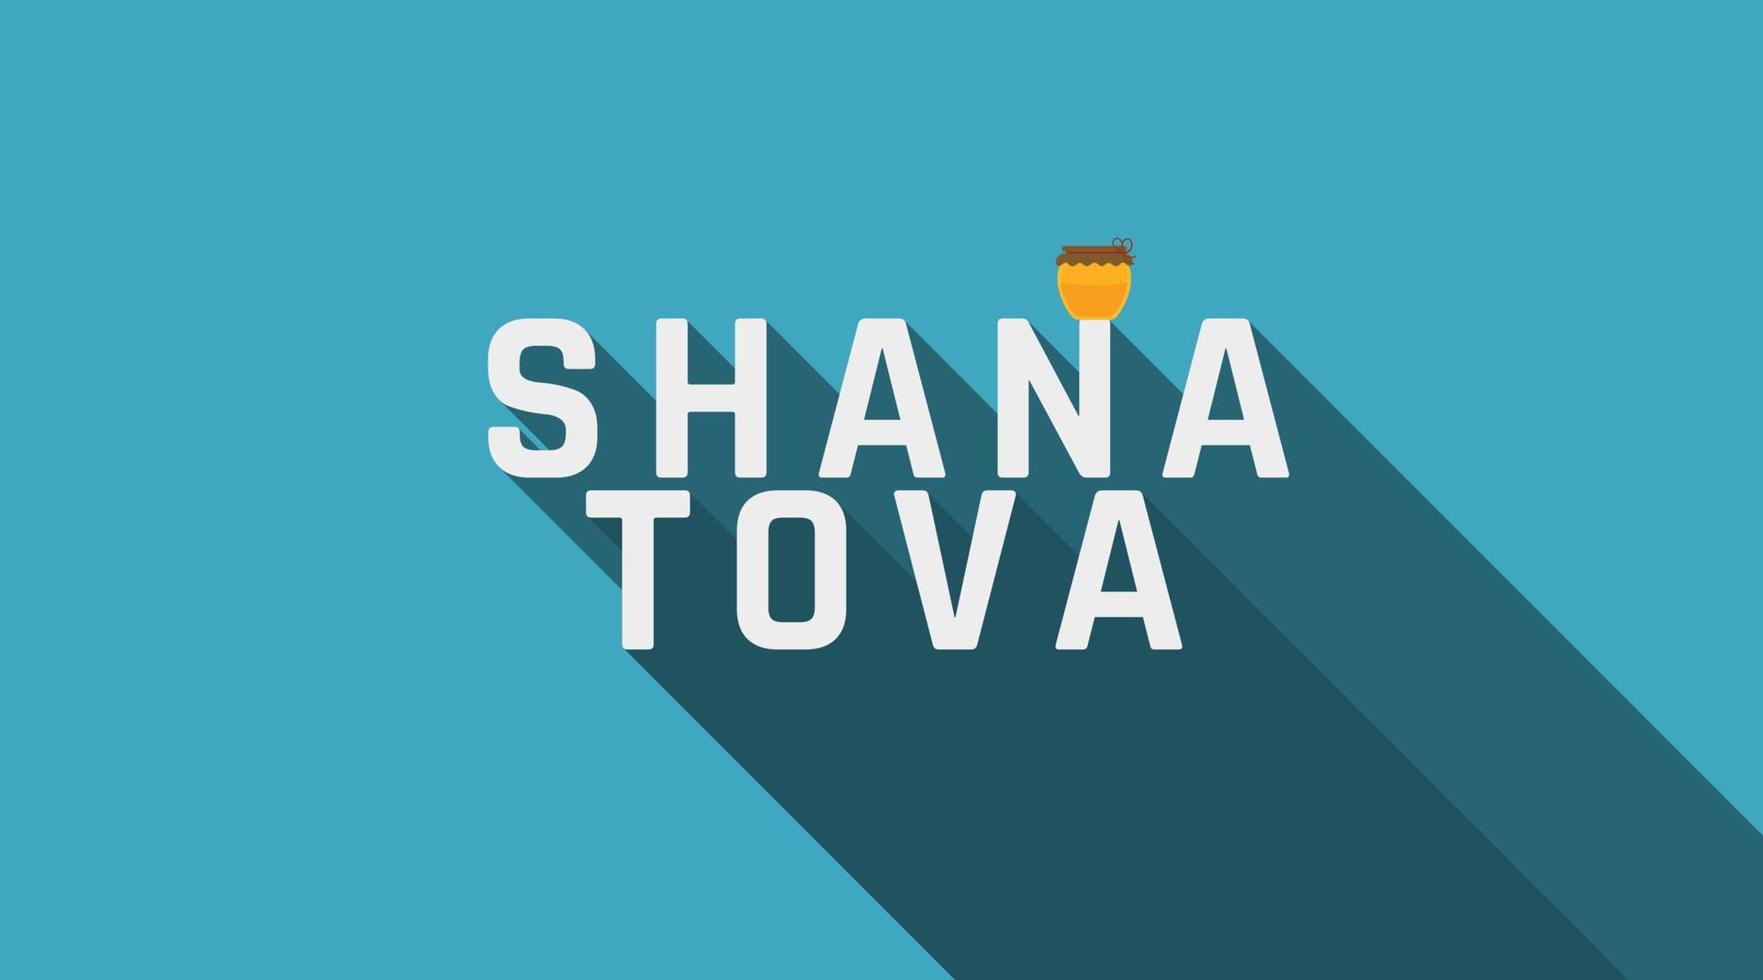 Rosh Hashanah holiday greeting with honey jar icon and english text vector